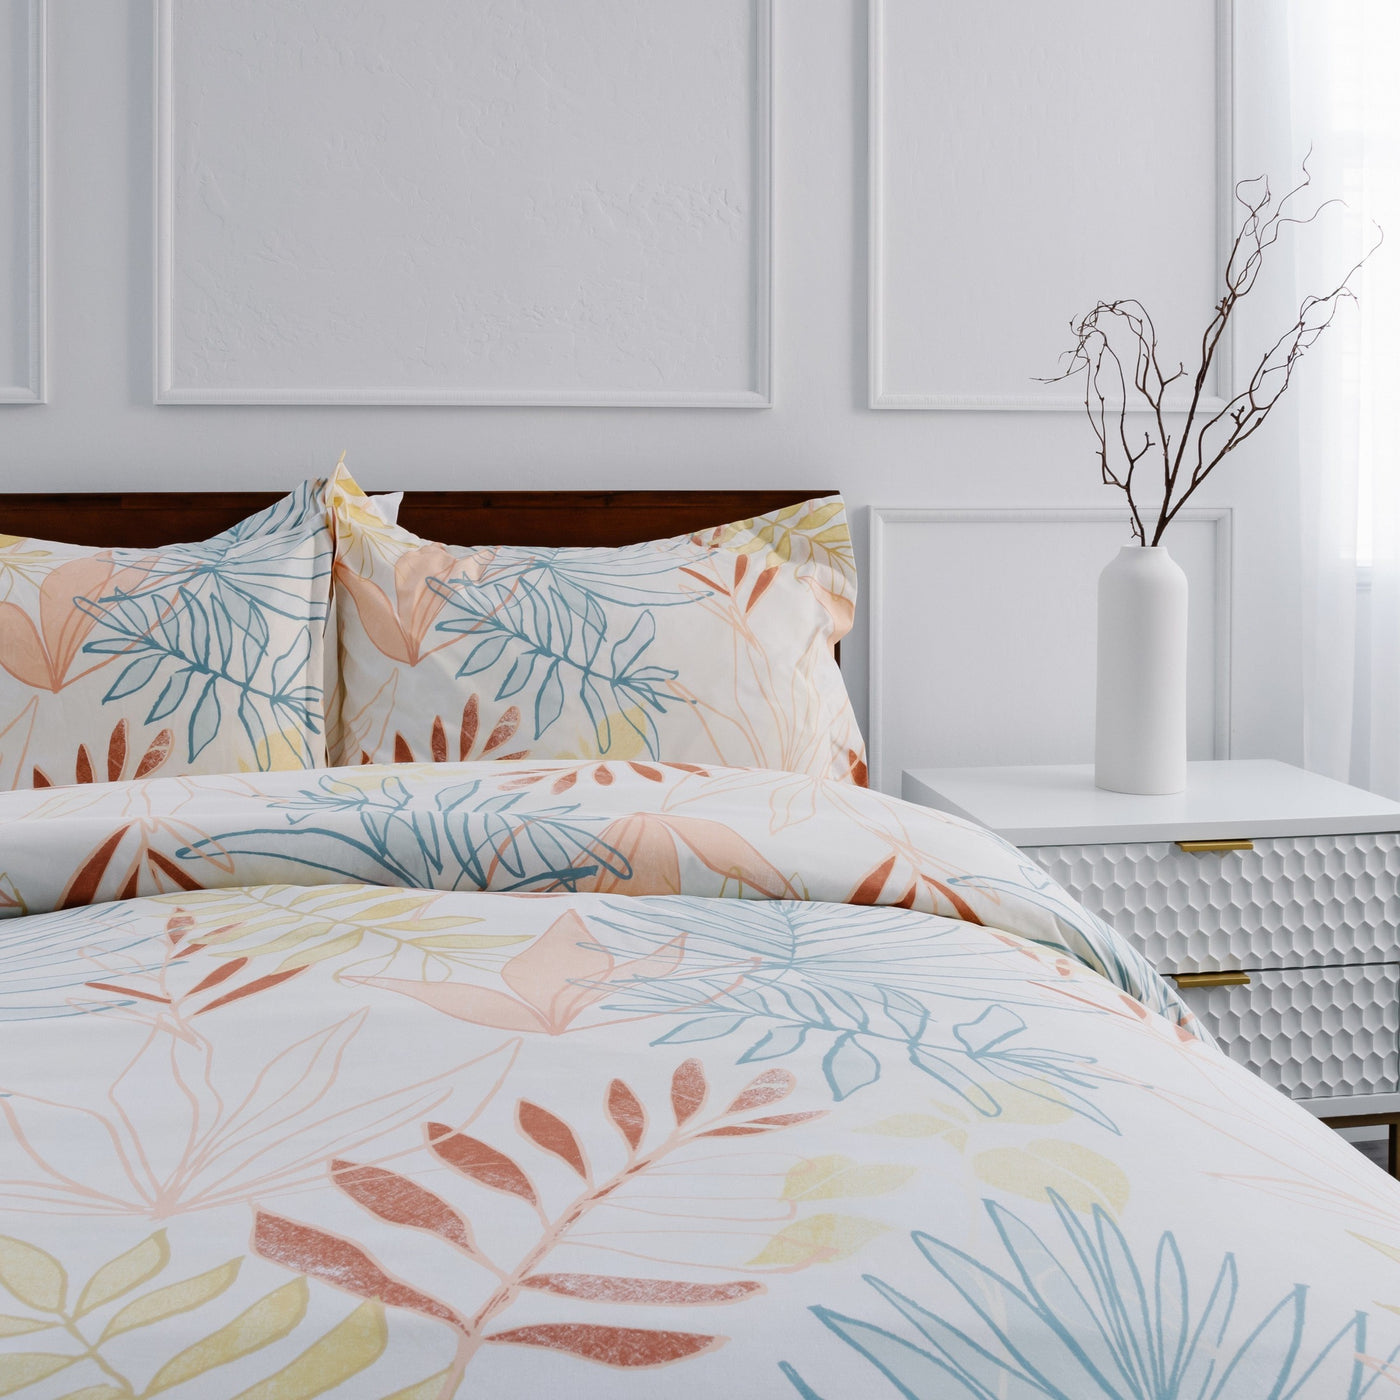 Front View of Tropic Leaf Comforter Set in Cream#color_tropic-leaf-cream